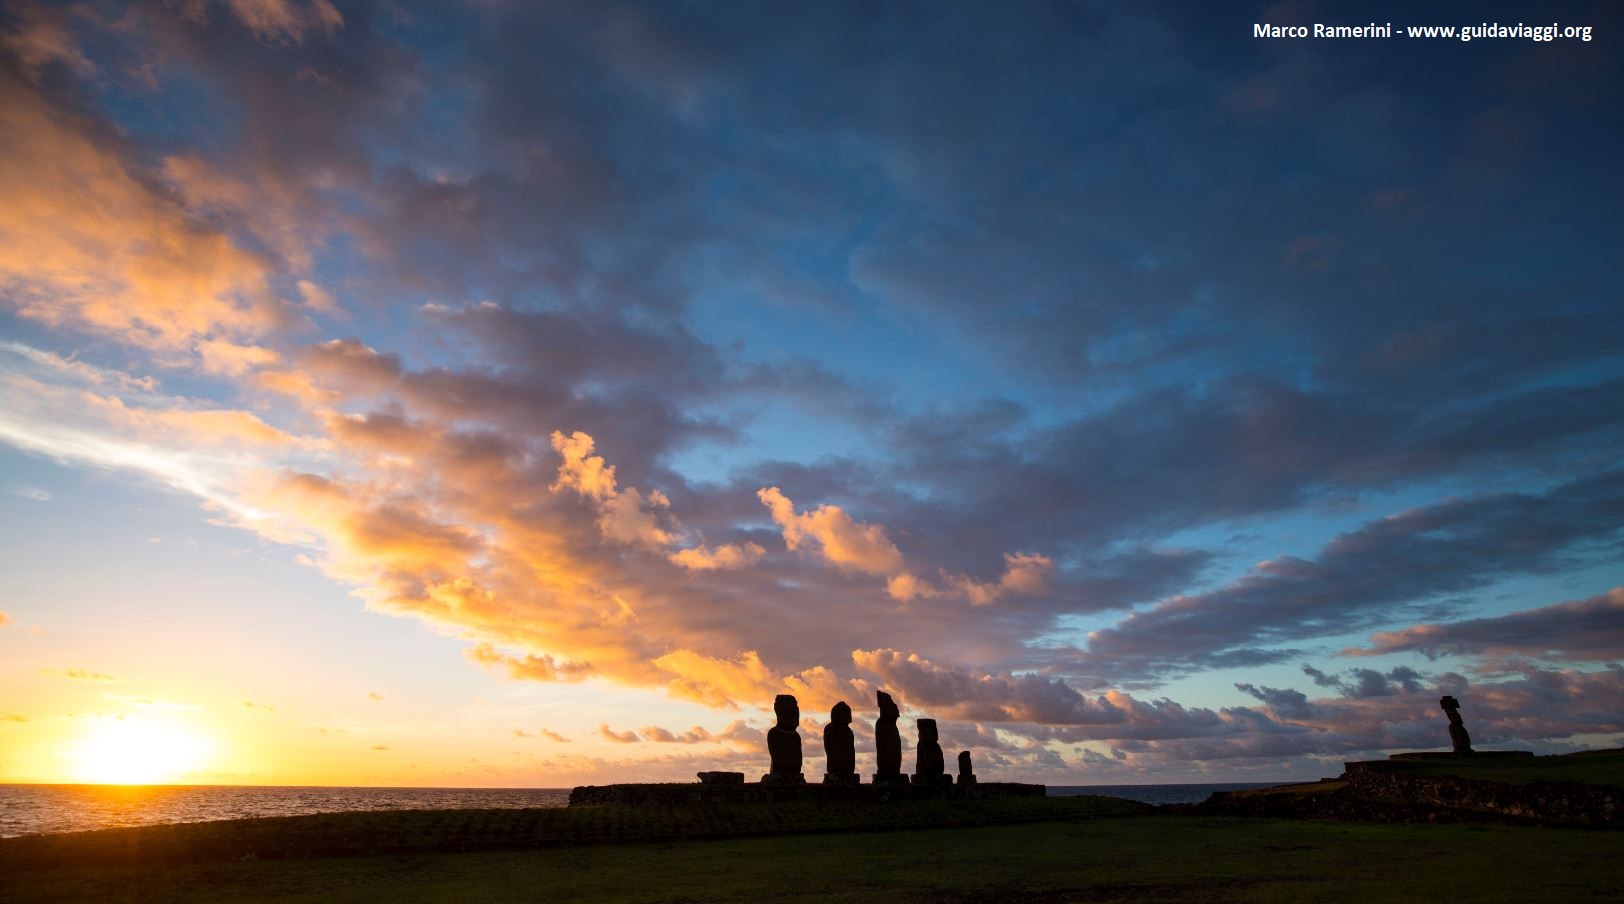 Ahu Tahai, Easter Island, Chile. Author and Copyright Marco Ramerini